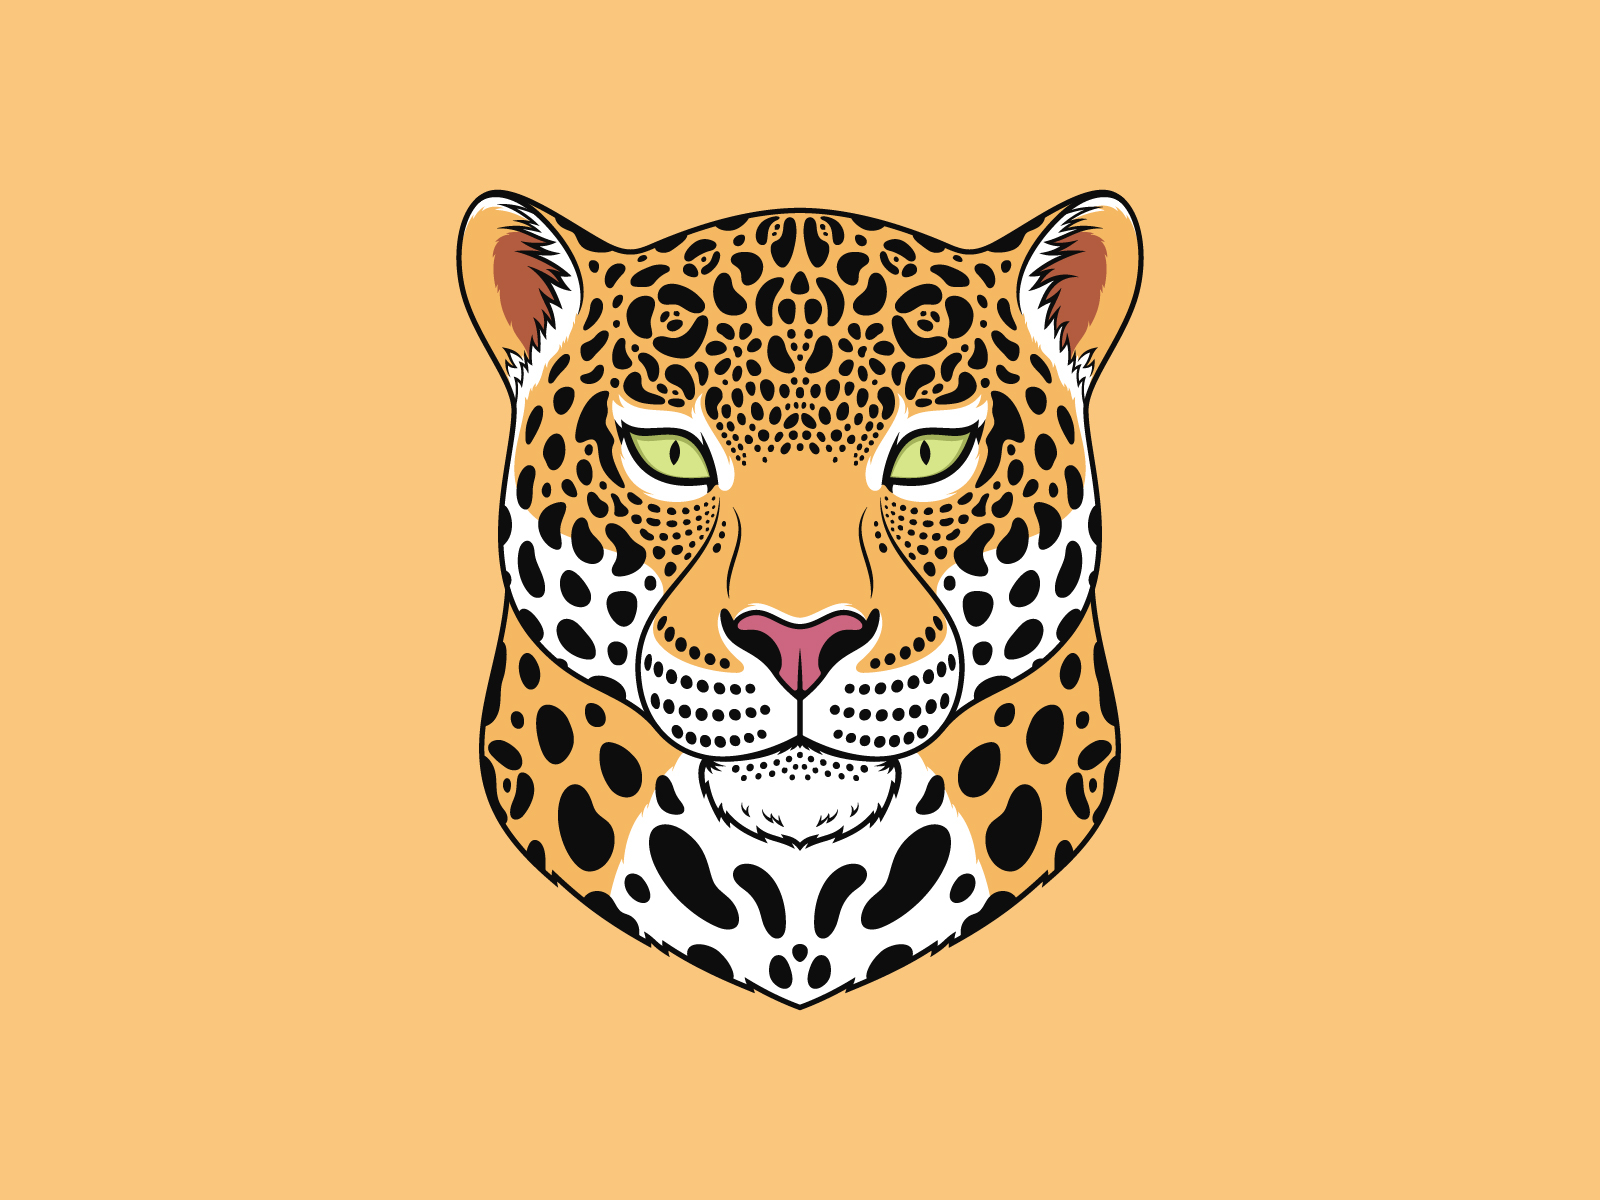 Jaguar Cat by Dmitry Mayer on Dribbble